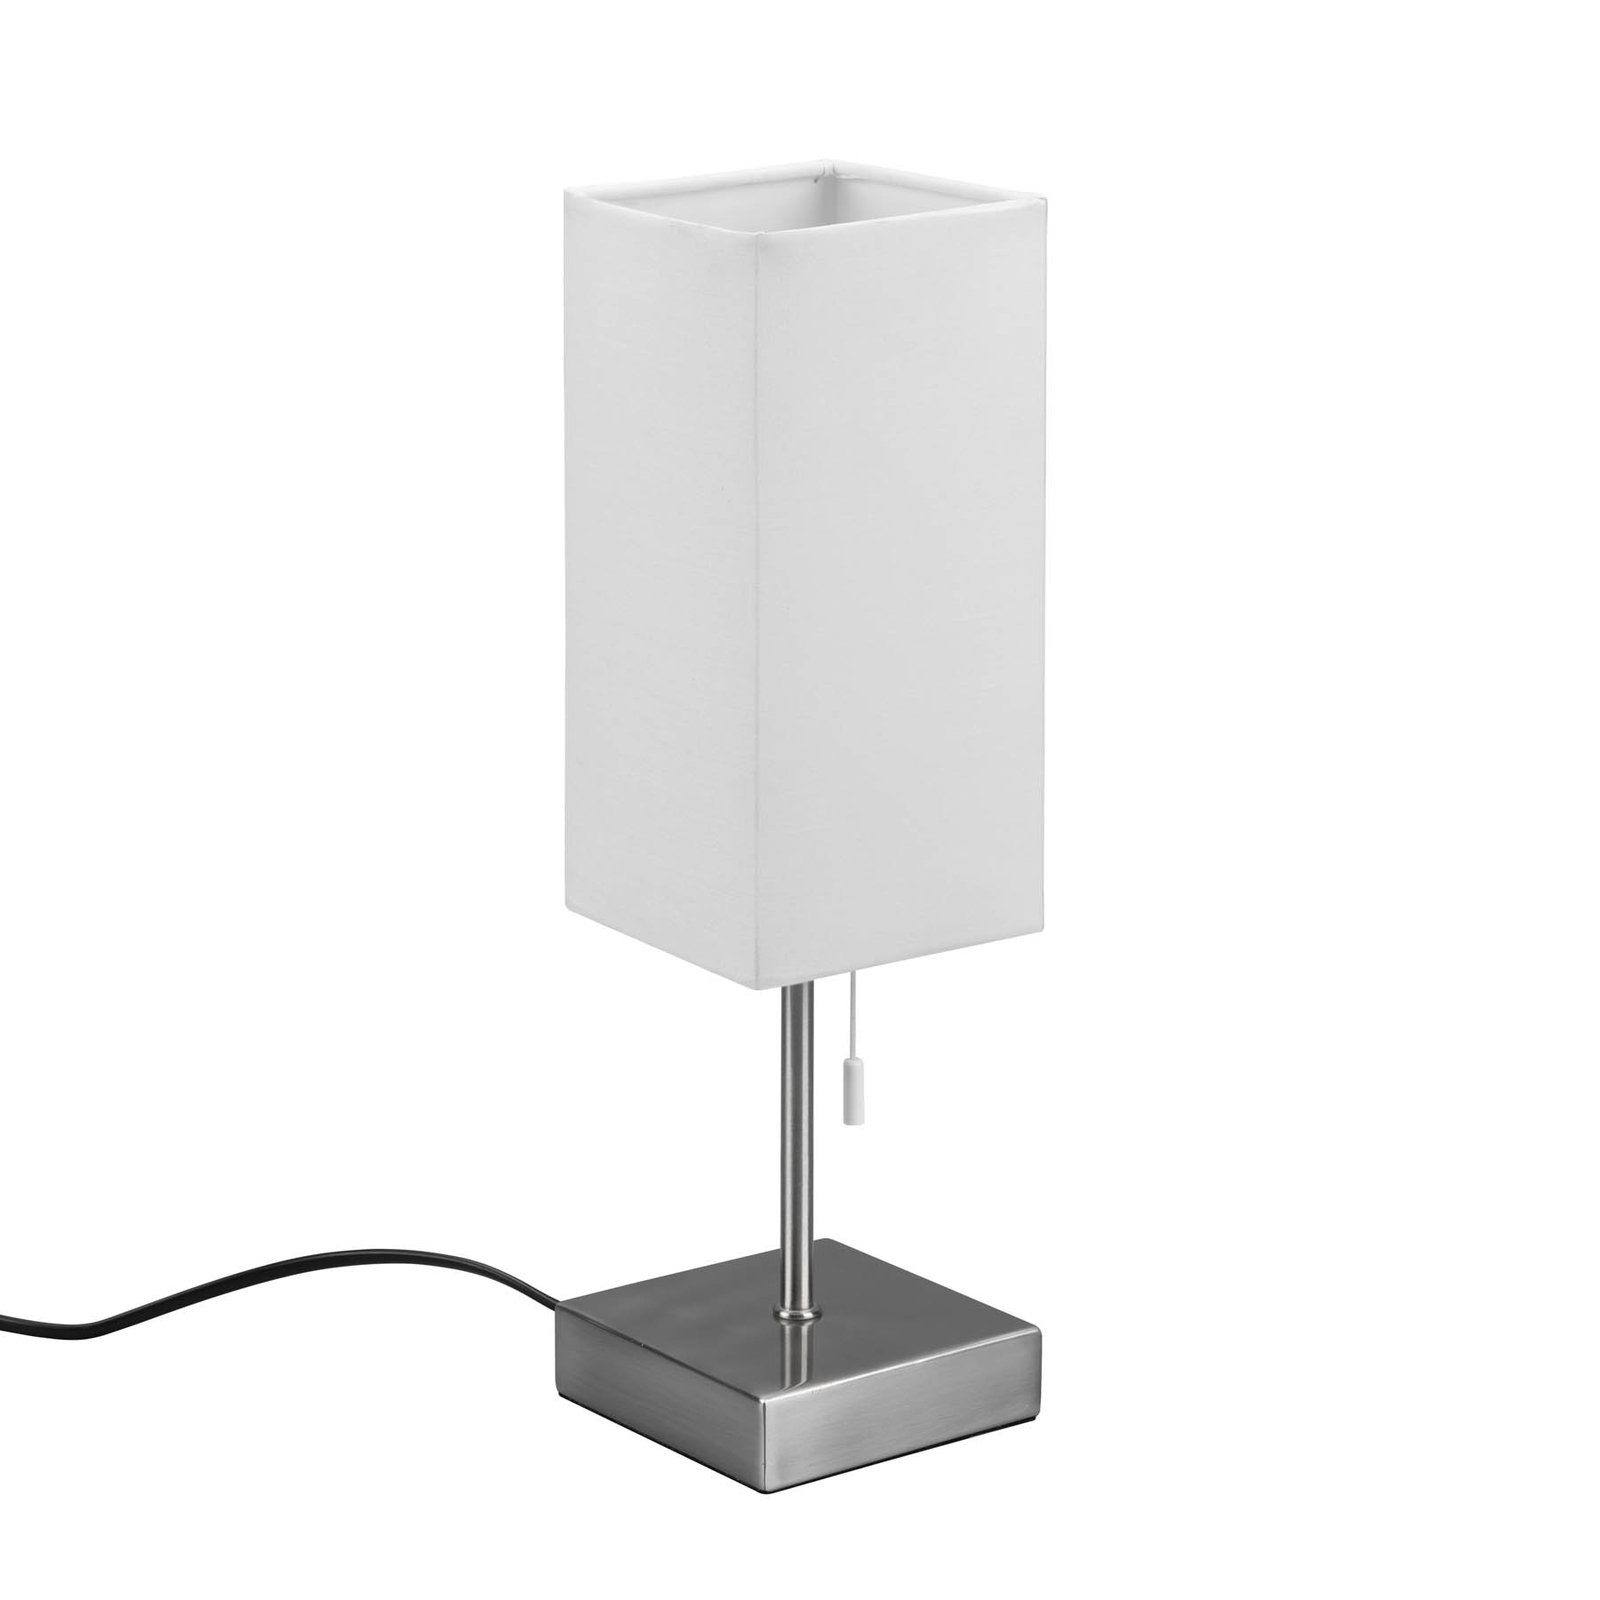 Tafellamp Ole met USB-aansluiting, wit/nikkel